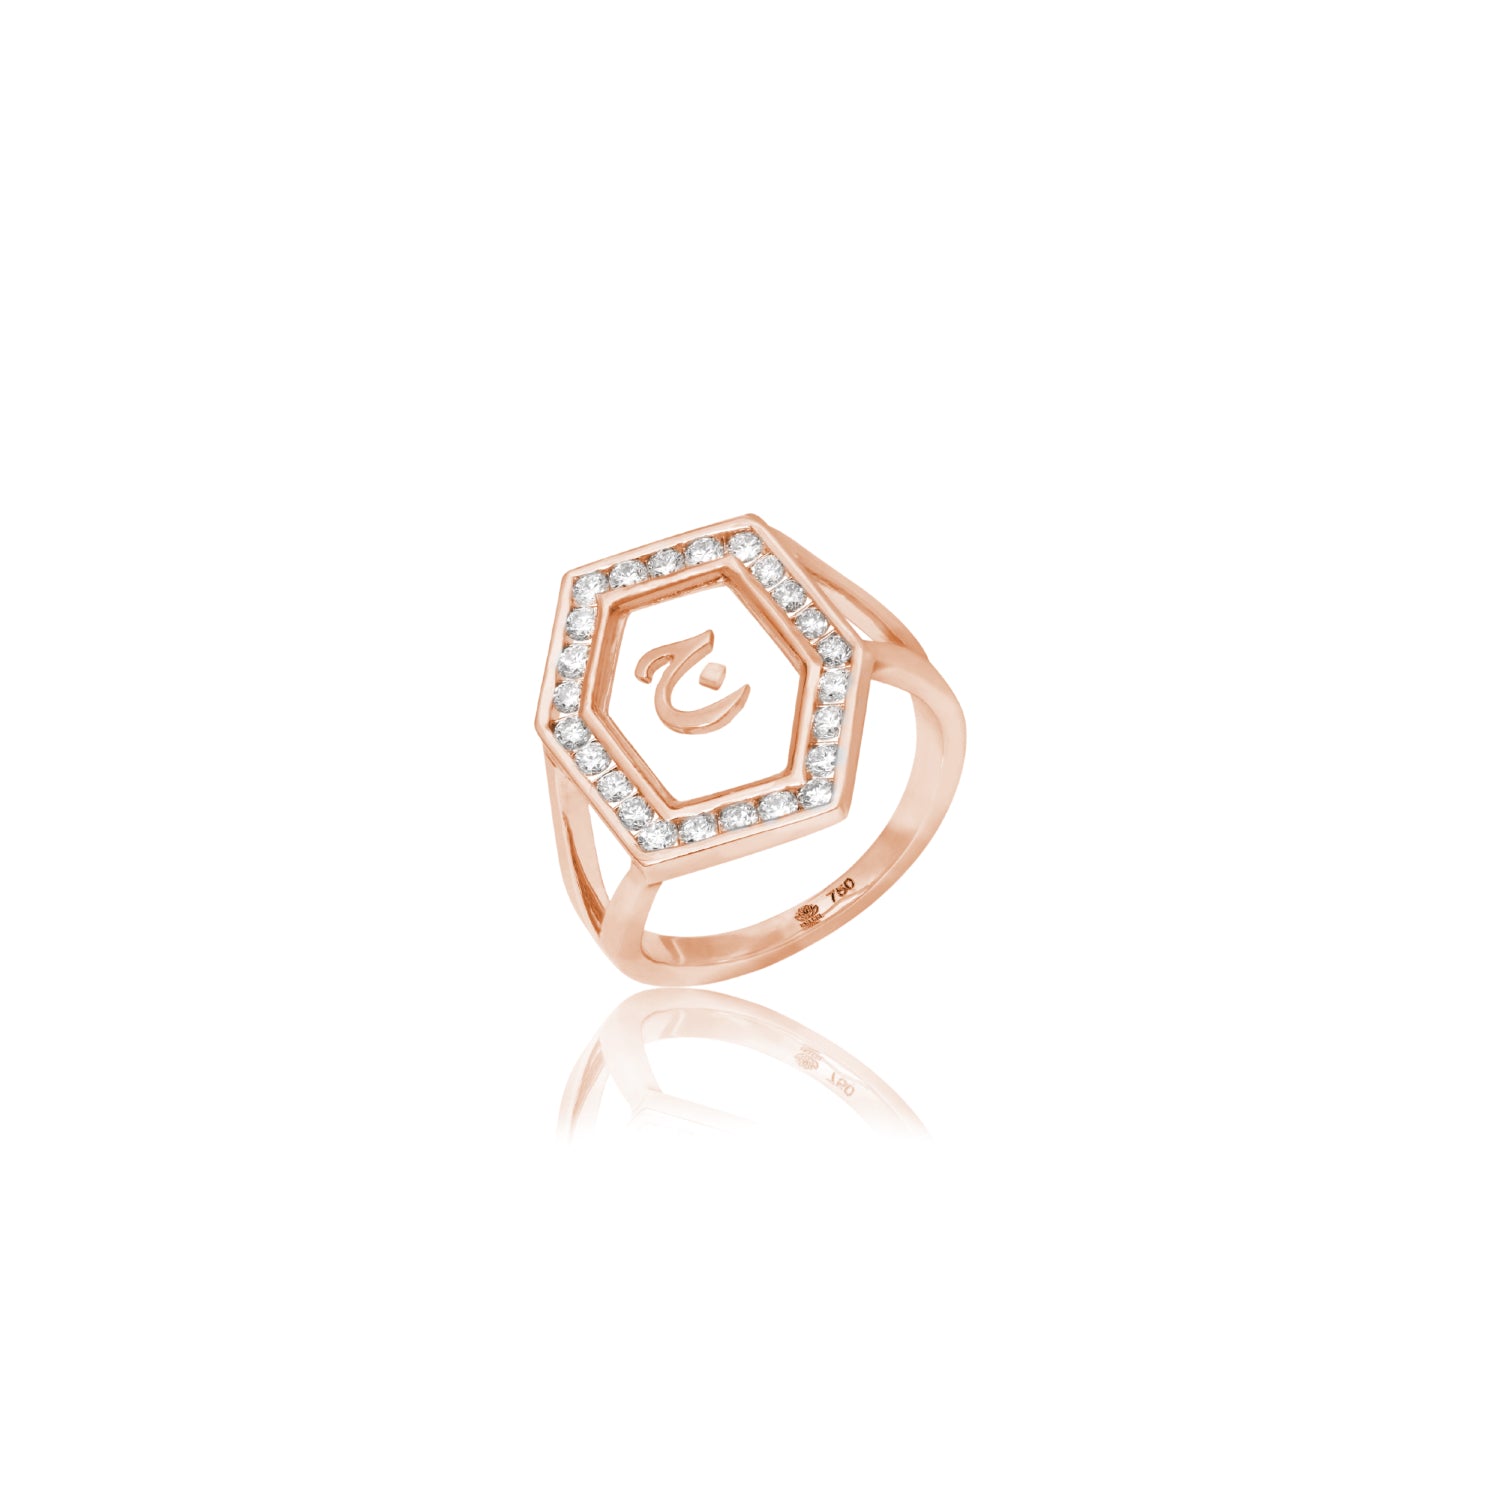 Qamoos 1.0 Letter ج Diamond Ring in Rose Gold